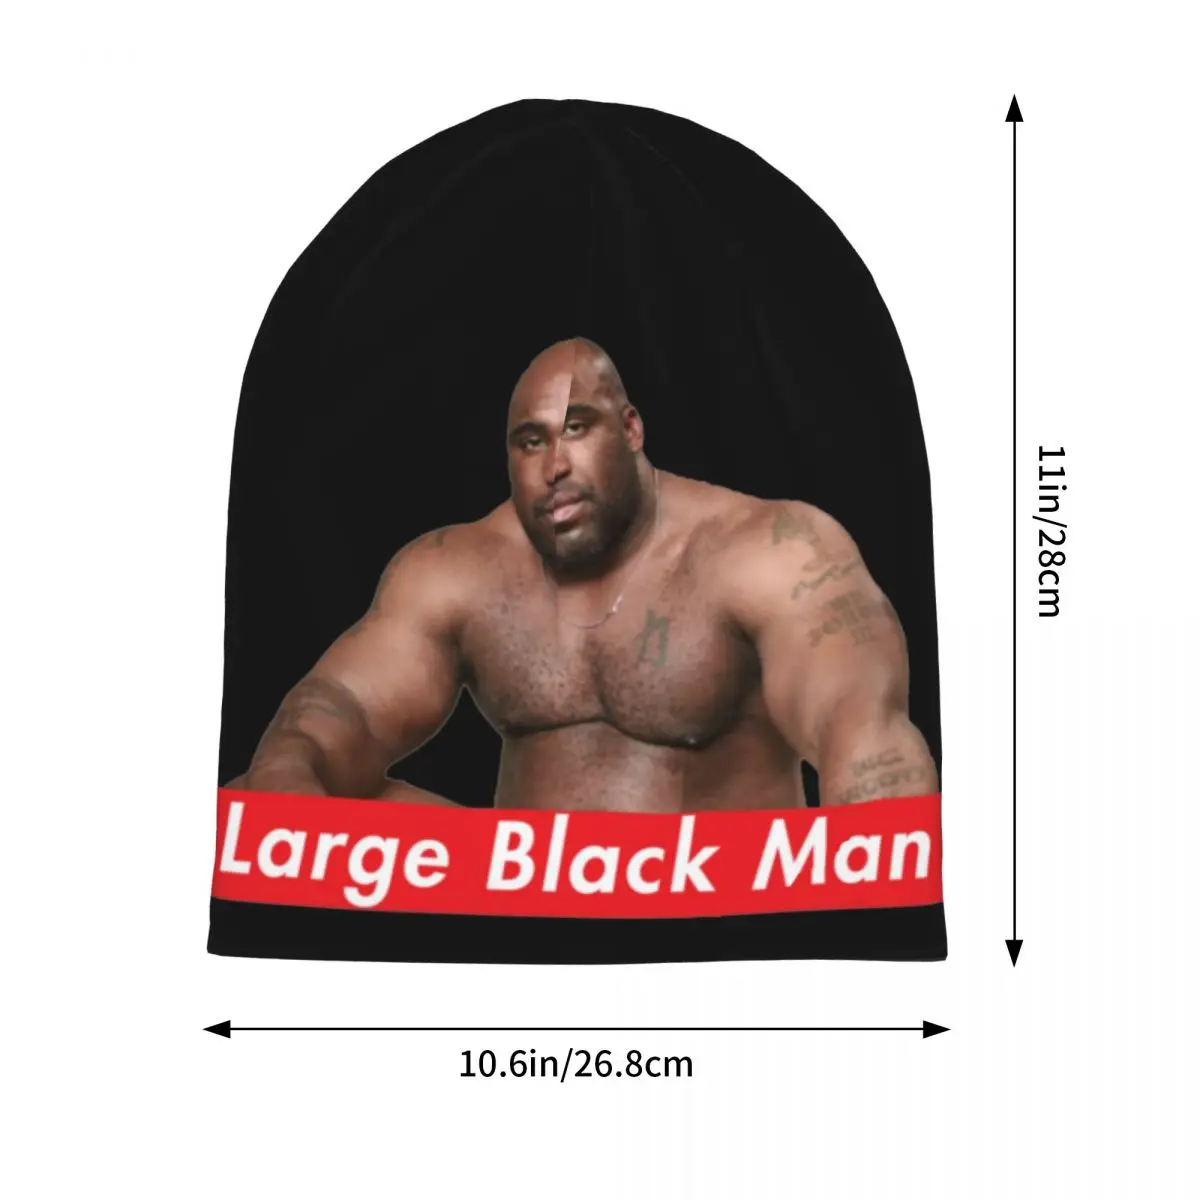 angelyn sitjar add photo large black man penis